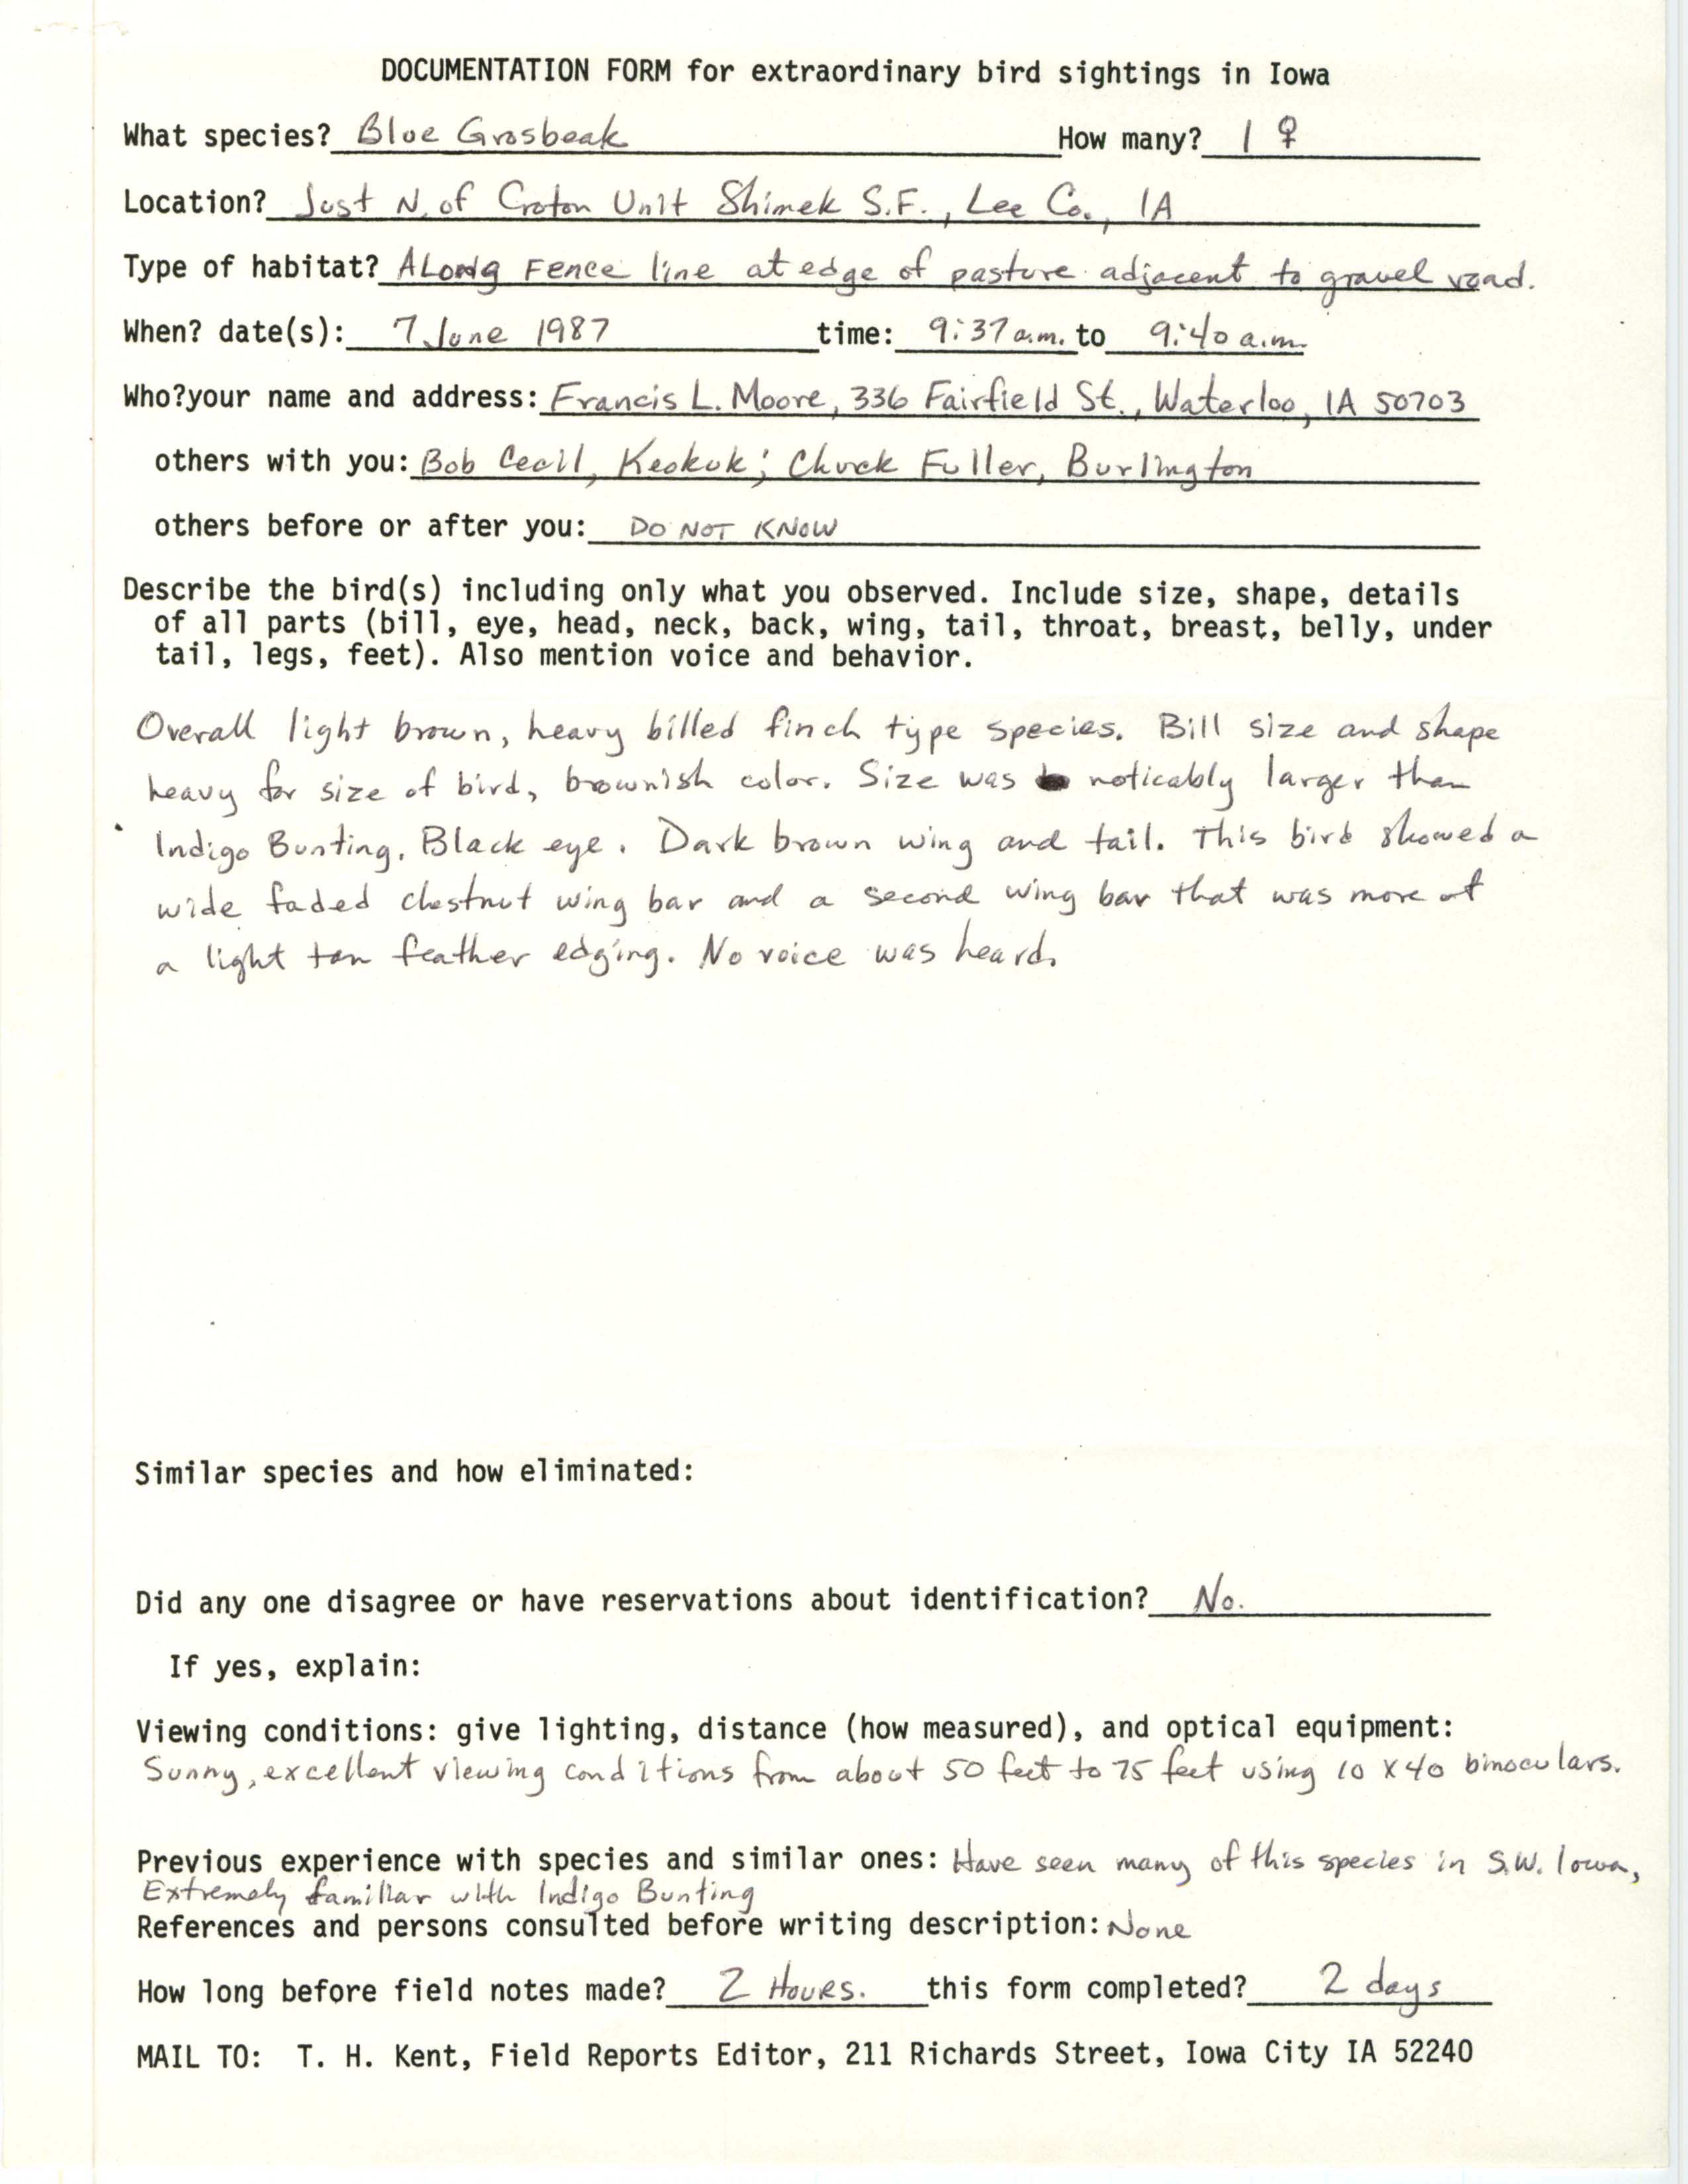 Rare bird documentation form for Blue Grosbeak north of the Croton Unit of Shimek State Forest, 1987